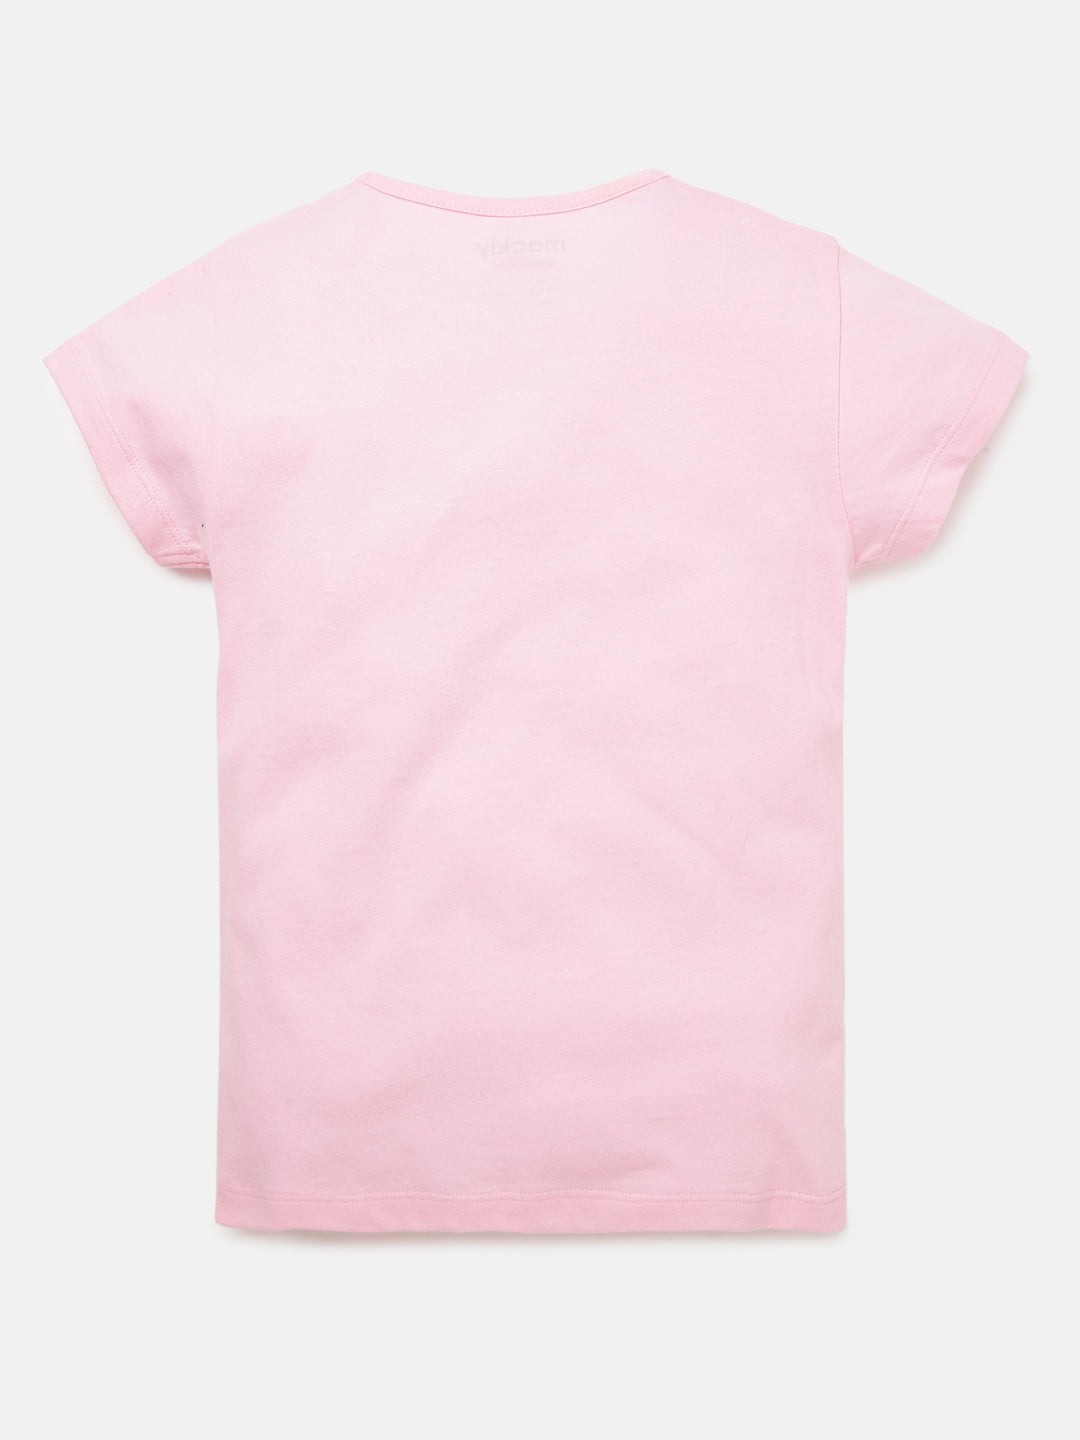 Girls Printed Cotton T-Shirt